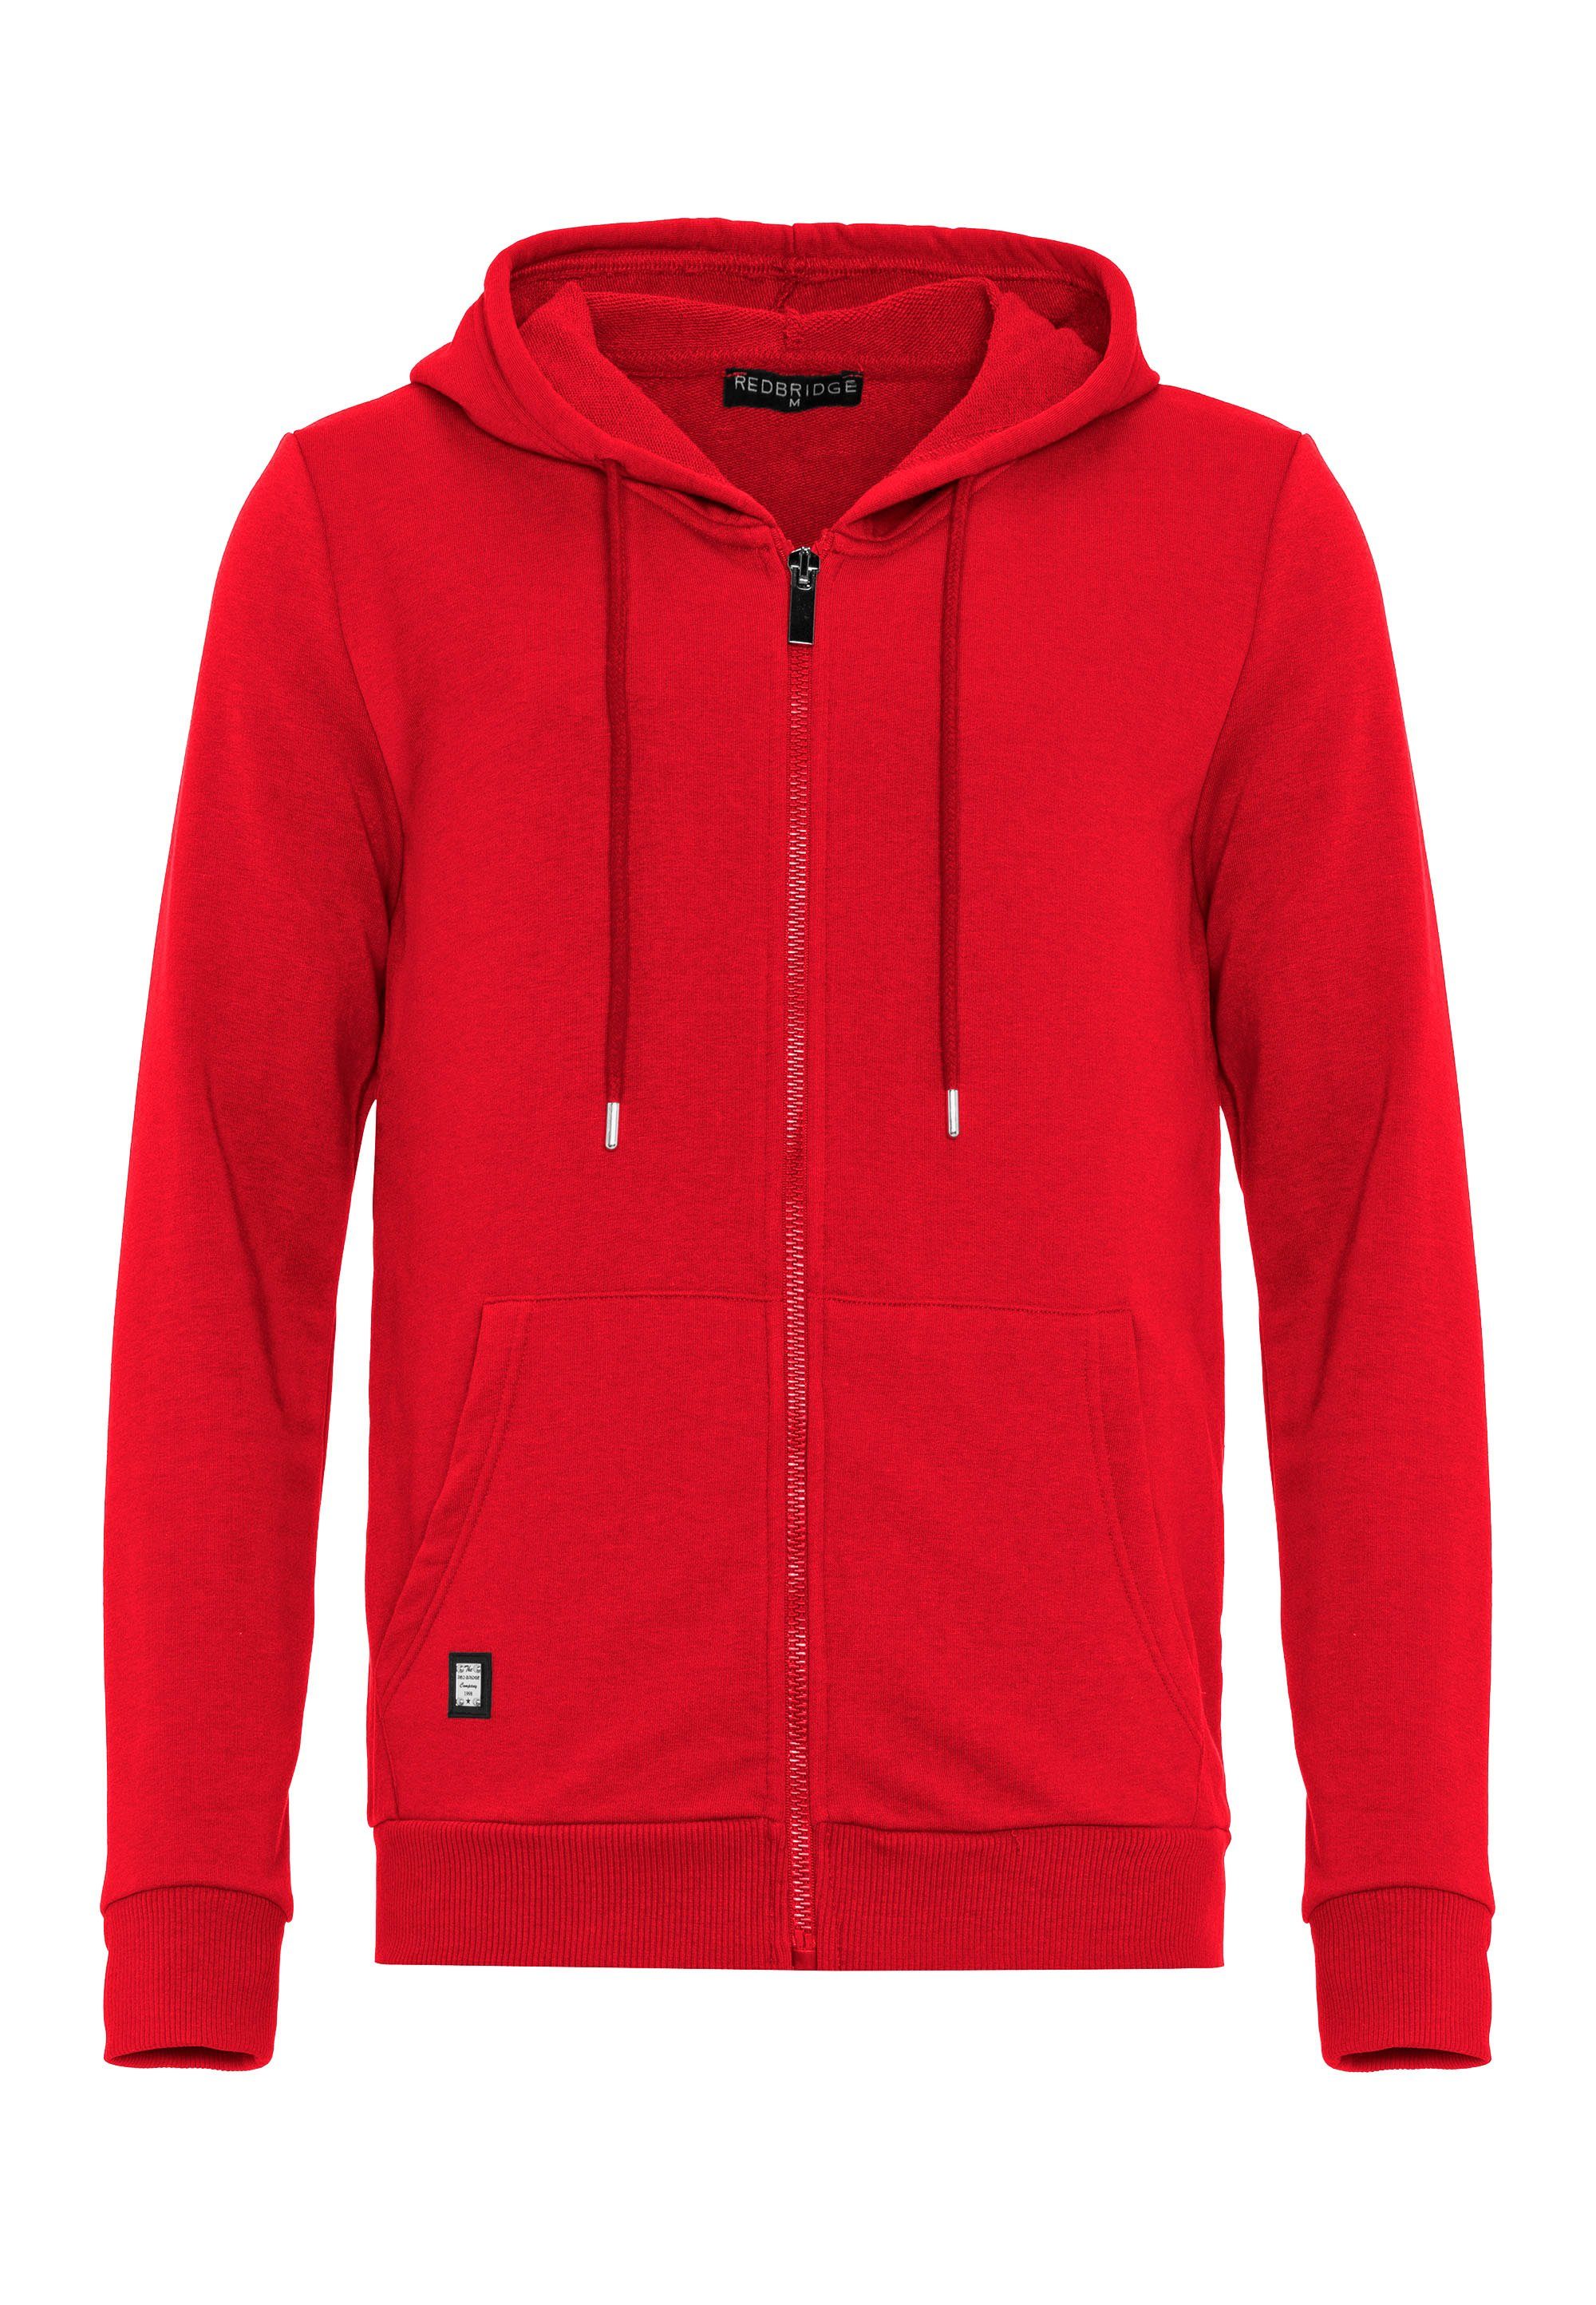 Kapuzensweatjacke Rot RedBridge modisch vielseitig, Premium mit Sweater Logopatch